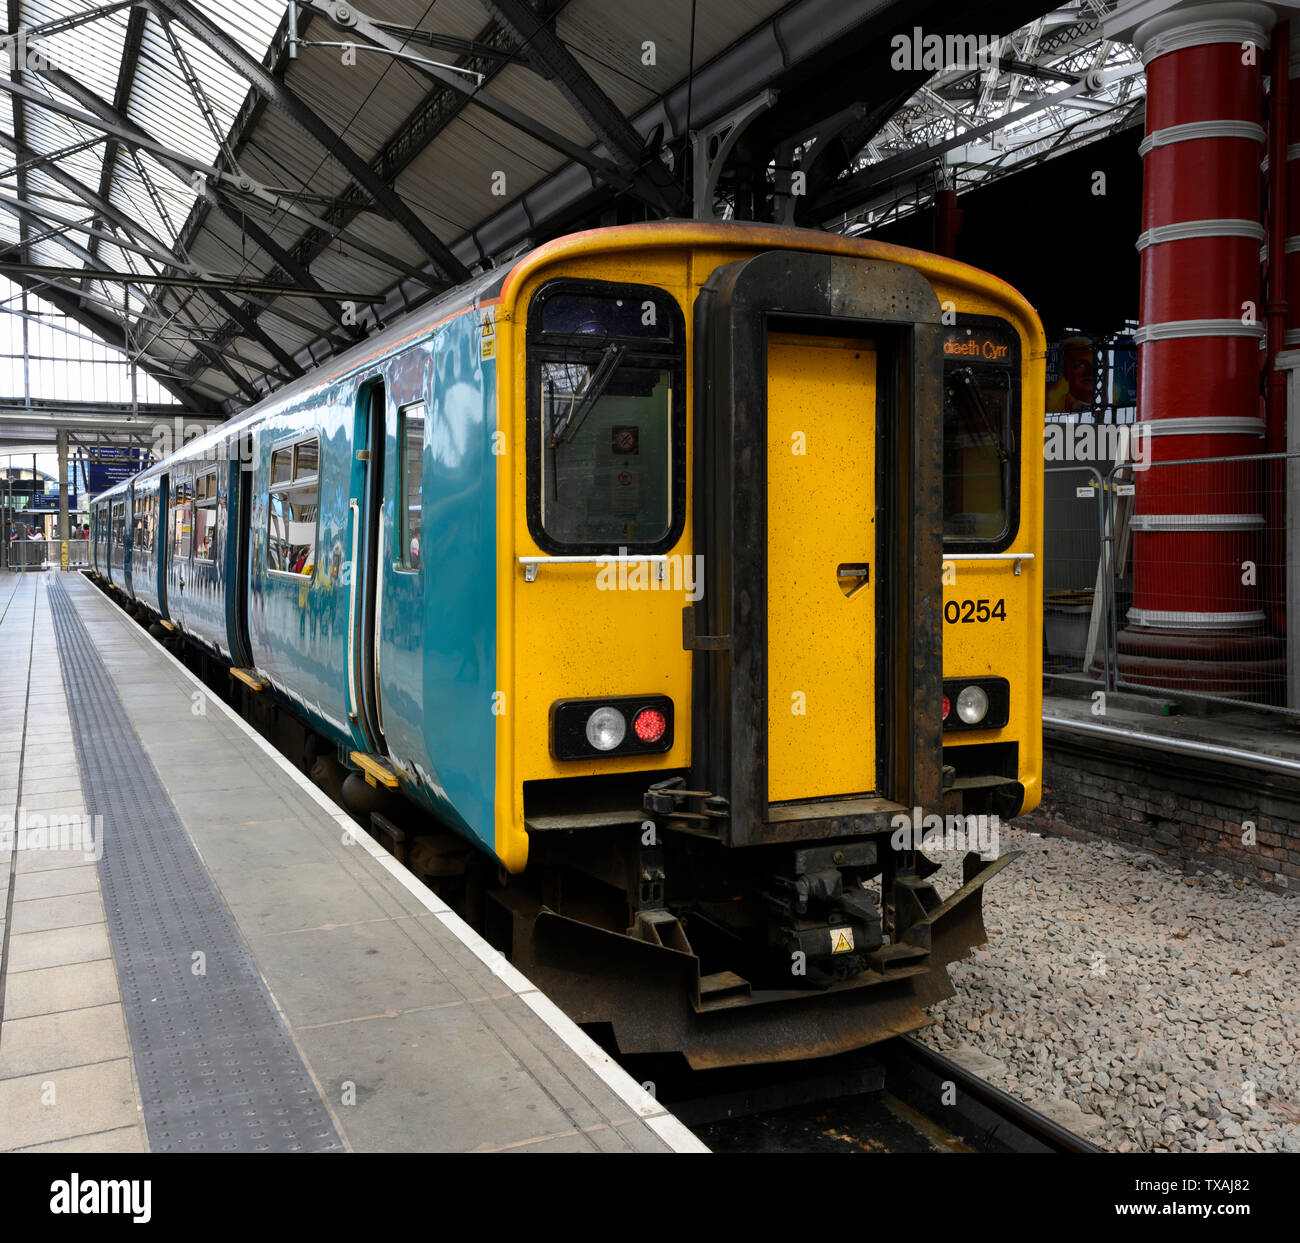 British Rail Class 150 Sprinter Diesel im Bahnsteig, Liverpool Lime Street, Liverpool, England, UK Stockfoto